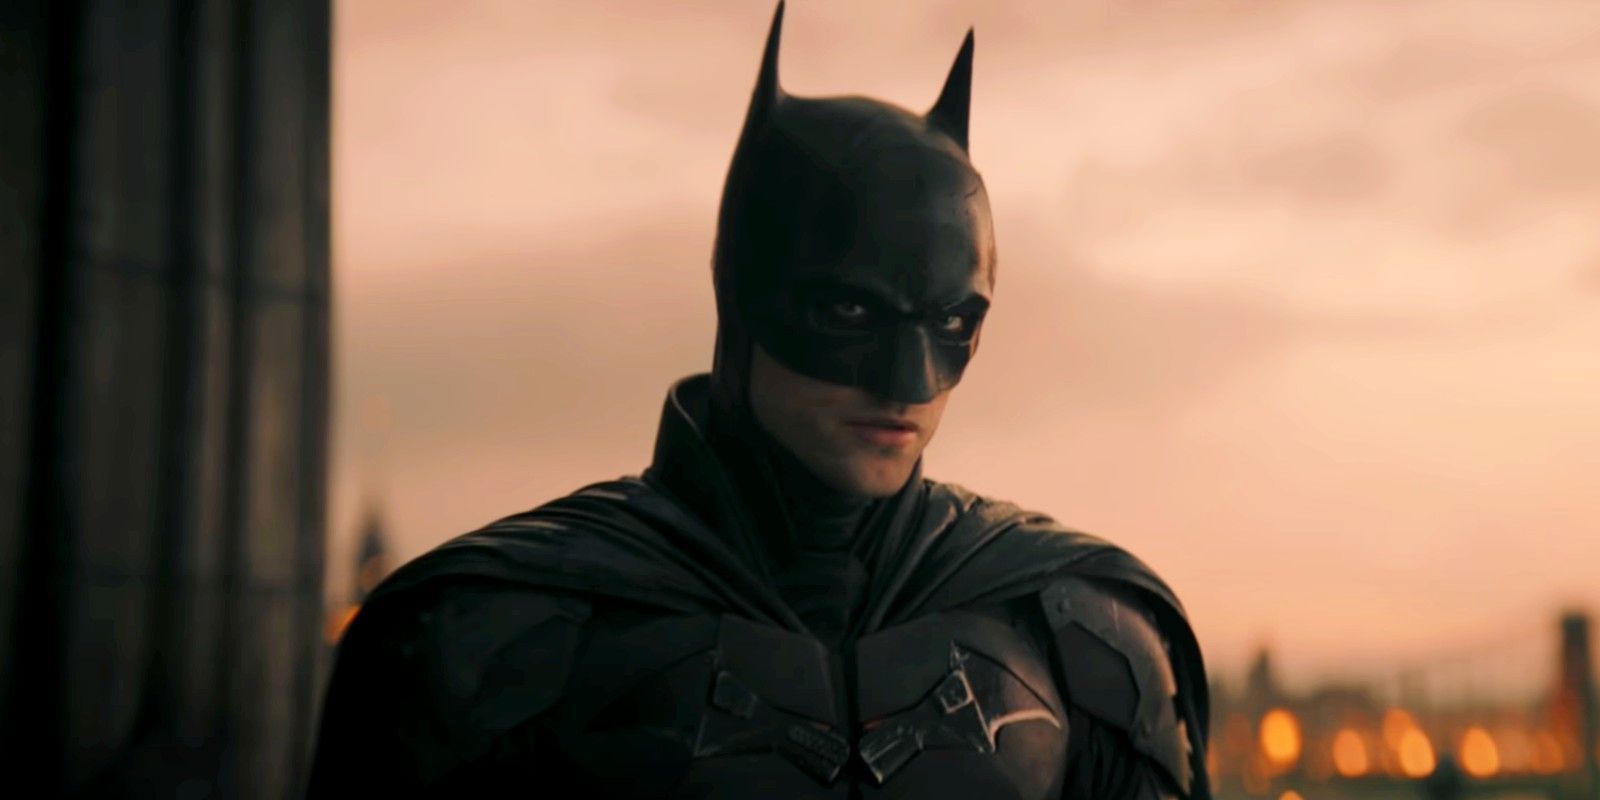 Robert Pattinson as Batman standing on a roof in The Batman